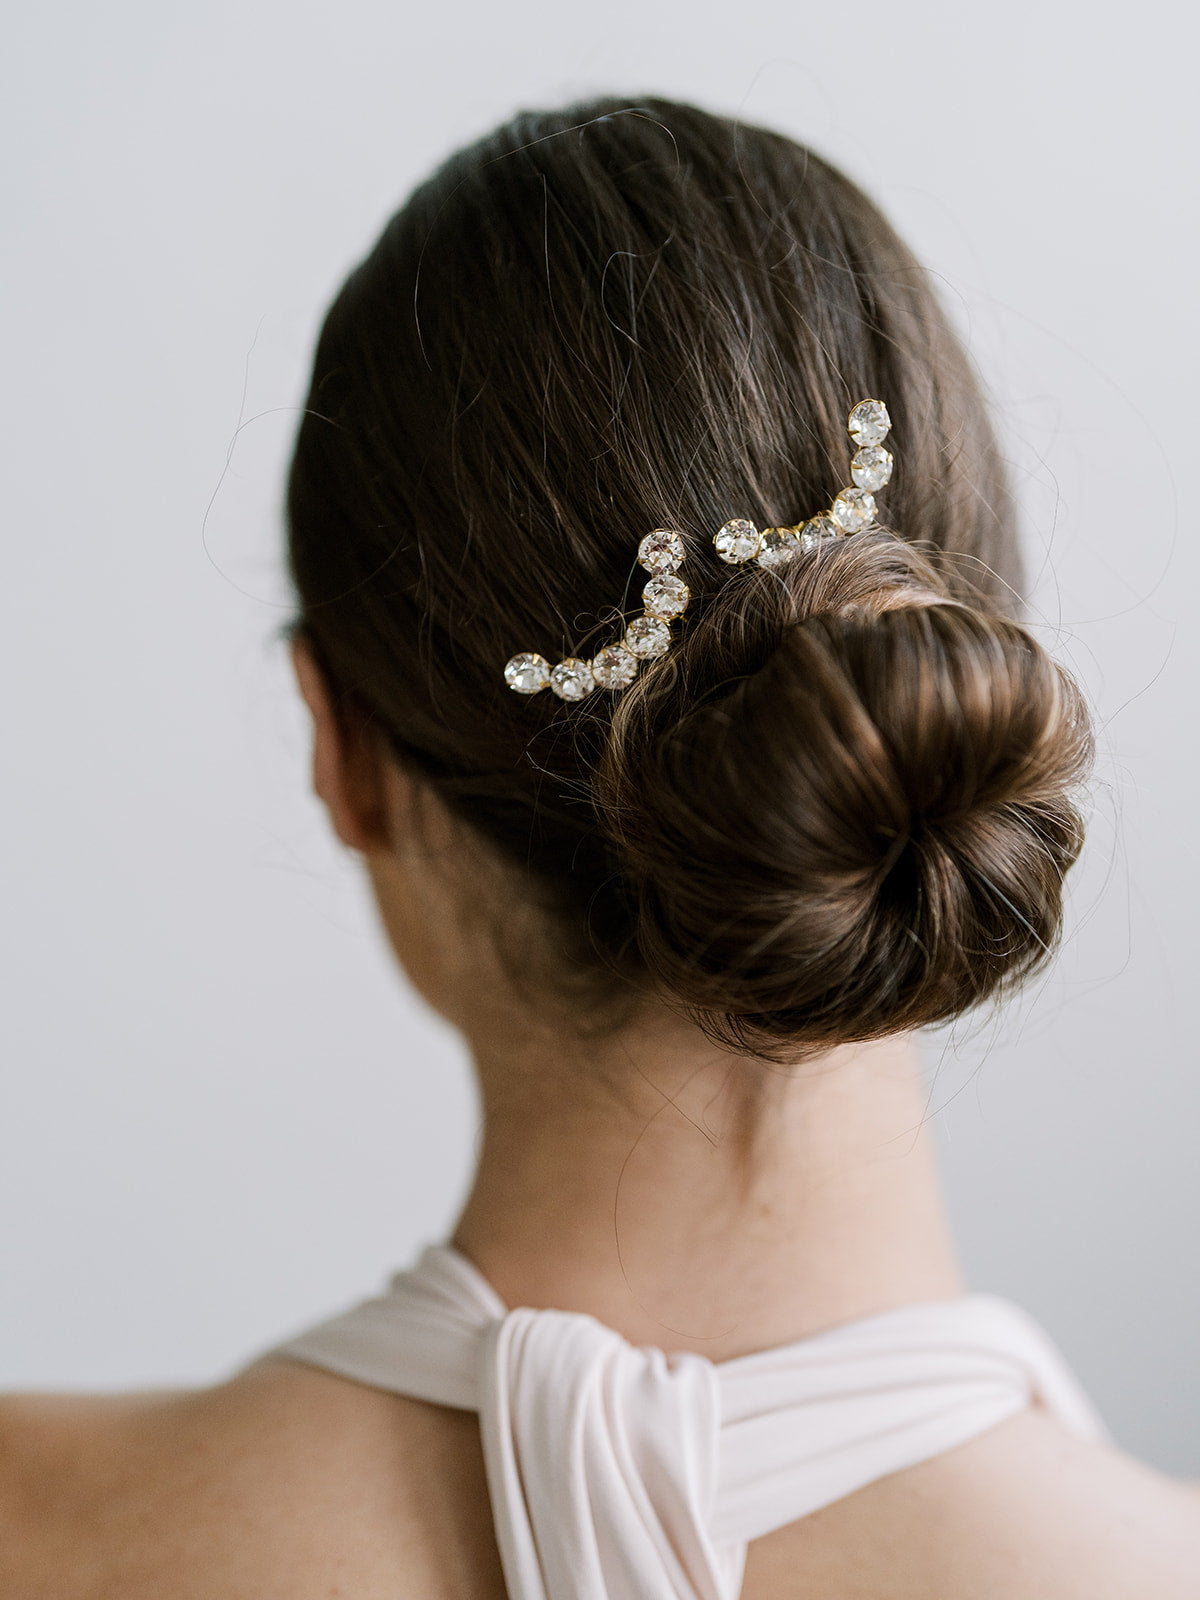 Mini Combs - Abstract Minimal Crystal Mini Wedding Comb Set, Swarovski, Hairpiece, Wedding Accessory, Bridal, Hair Clip, Hair Accessories